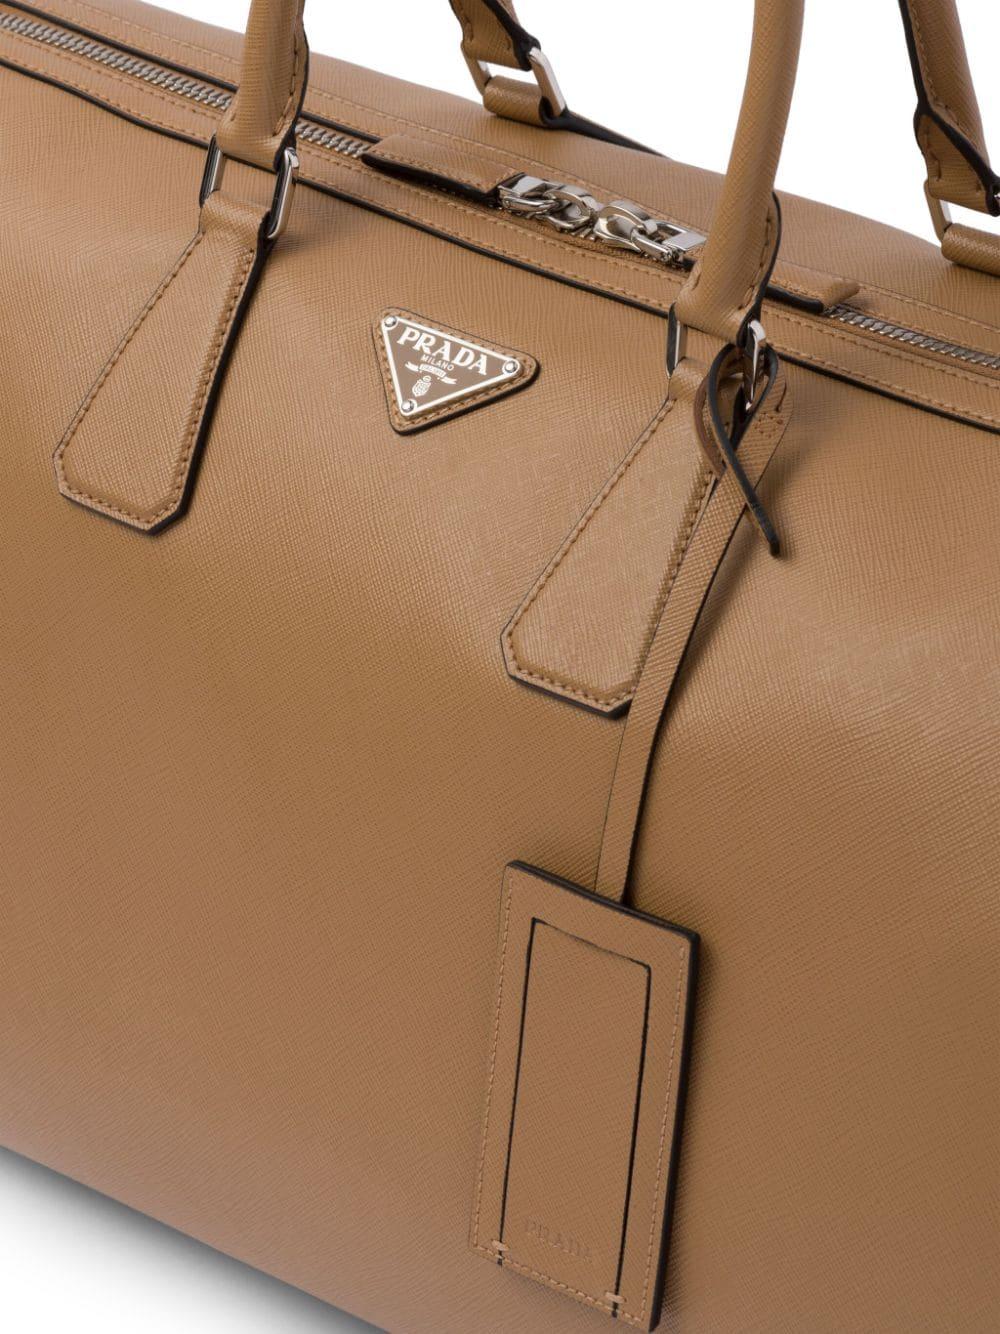 Prada triangle-logo Leather Tote Bag - Farfetch